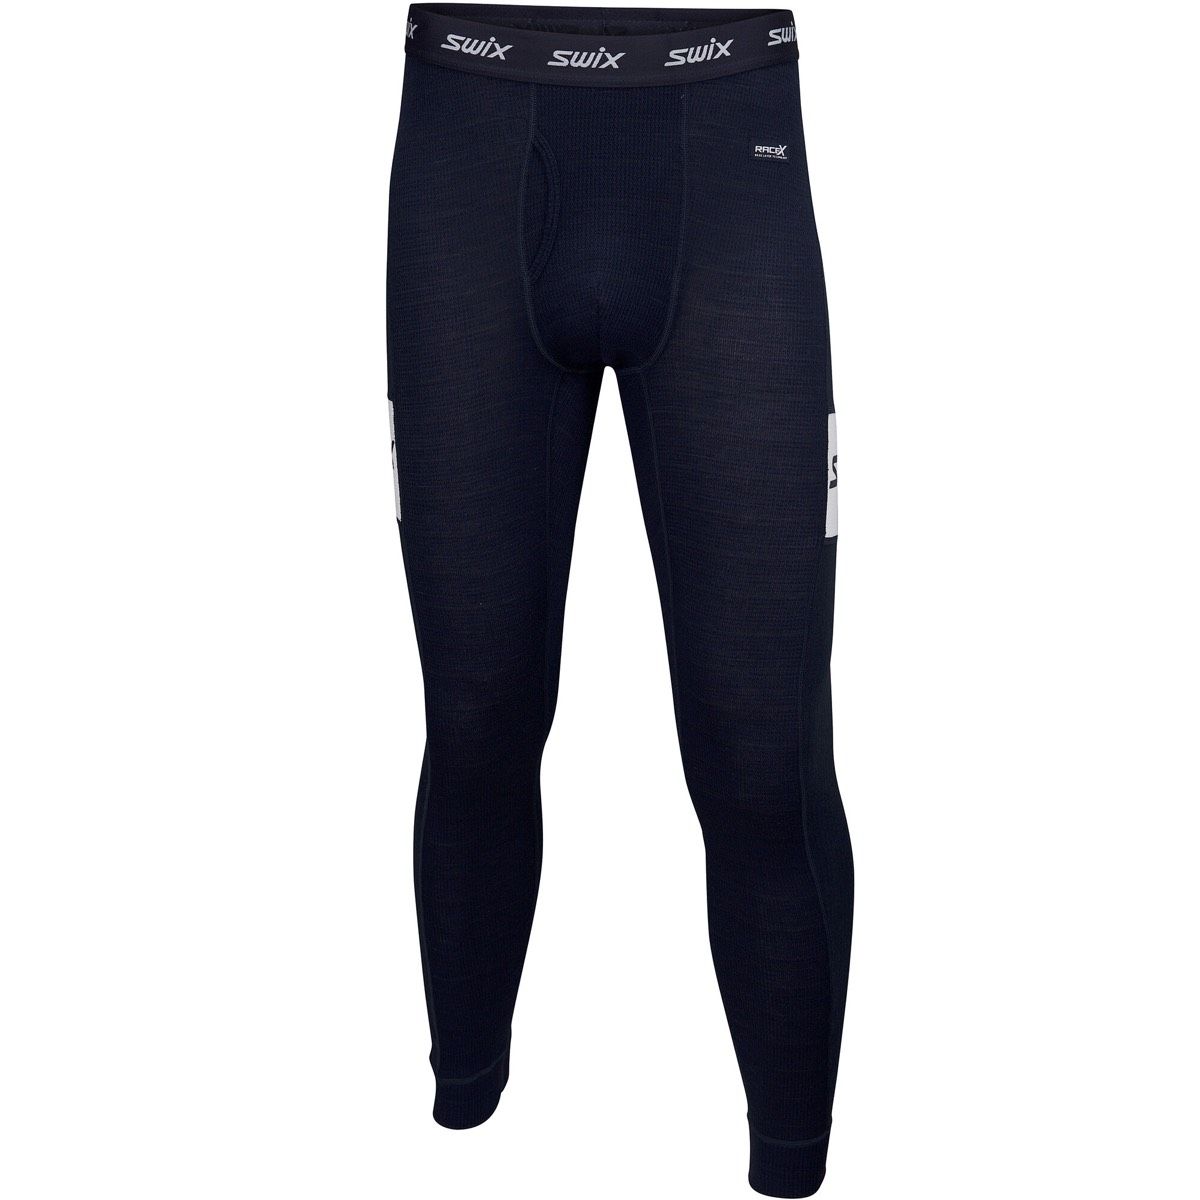 Swix RaceX Warm Bodywear Pants Men's Dark Navy